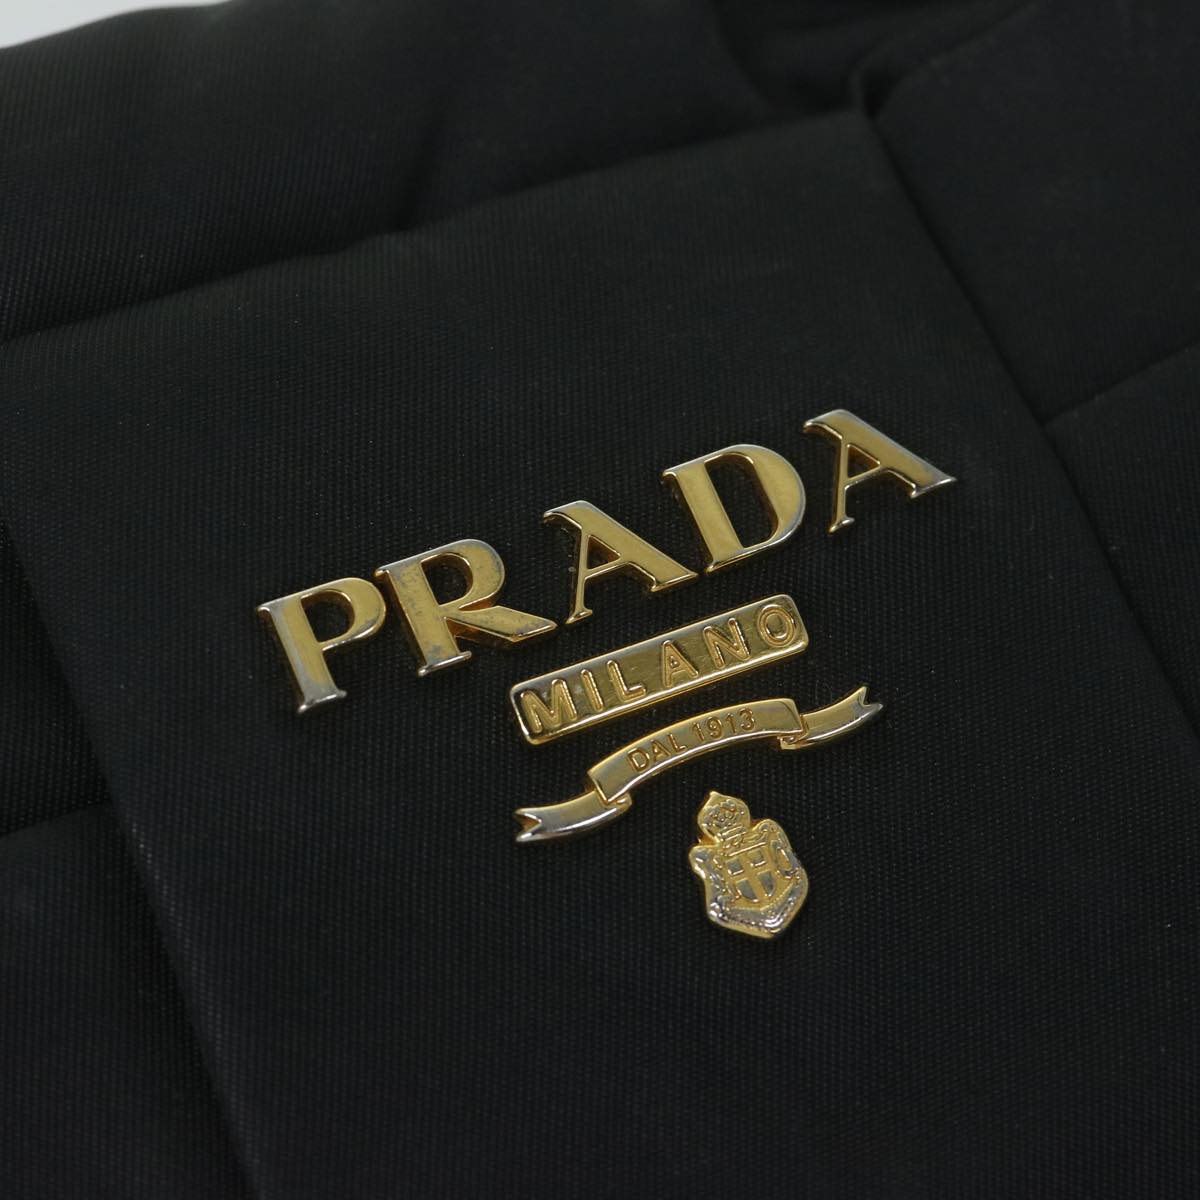 PRADA Hand Bag Nylon 2way Black Auth 62501